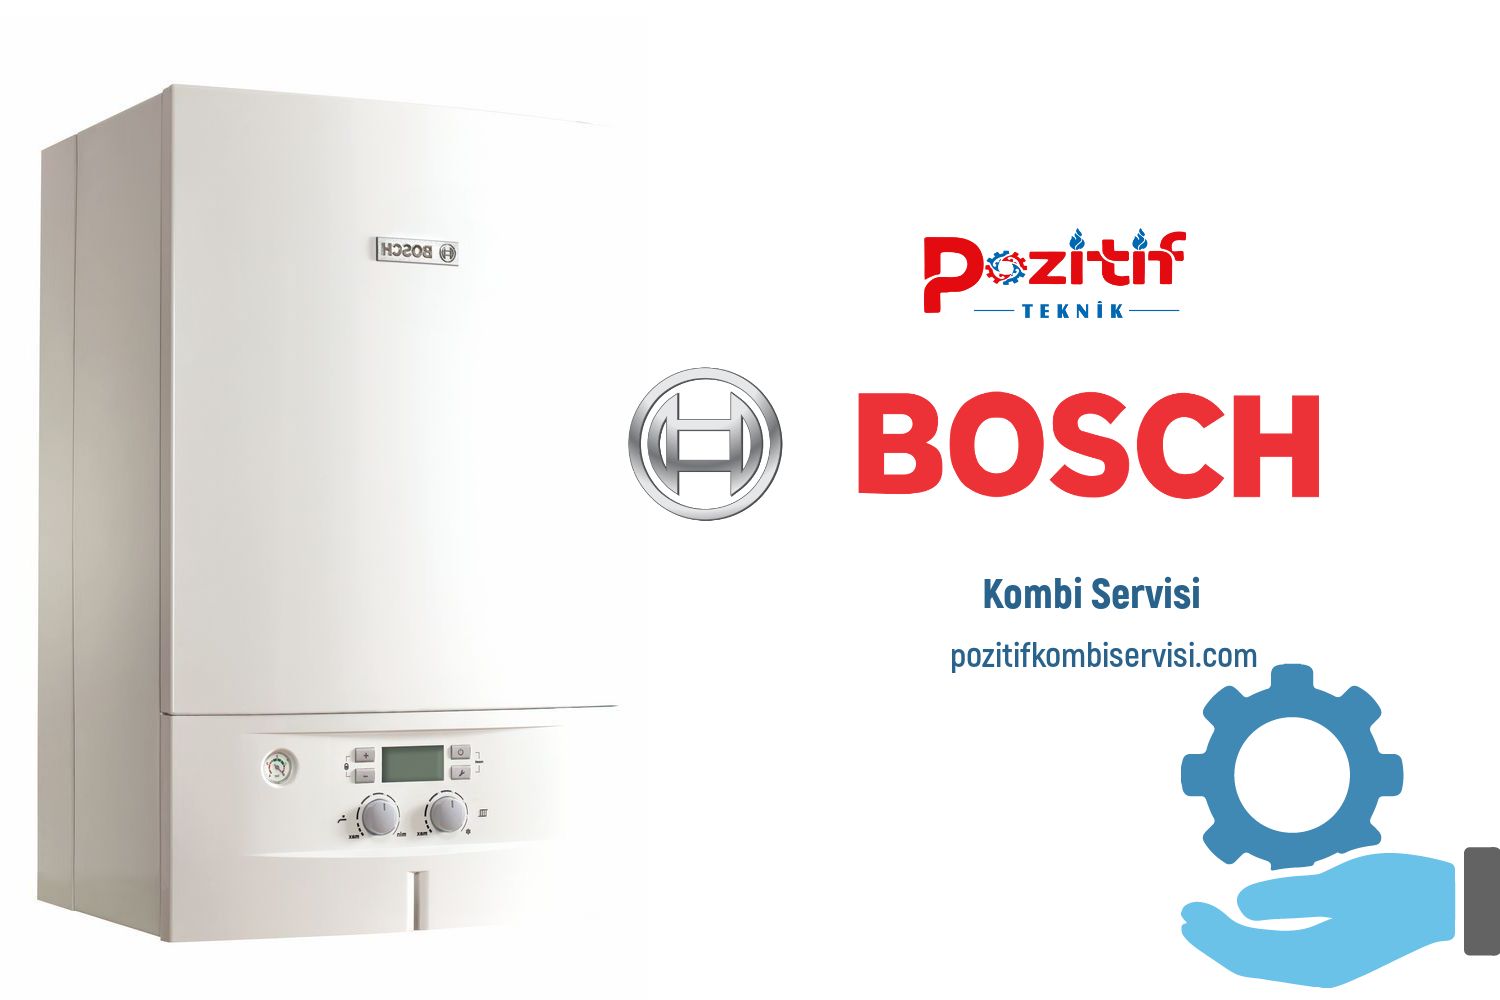 Kapaklı Bosch Kombi Servisi